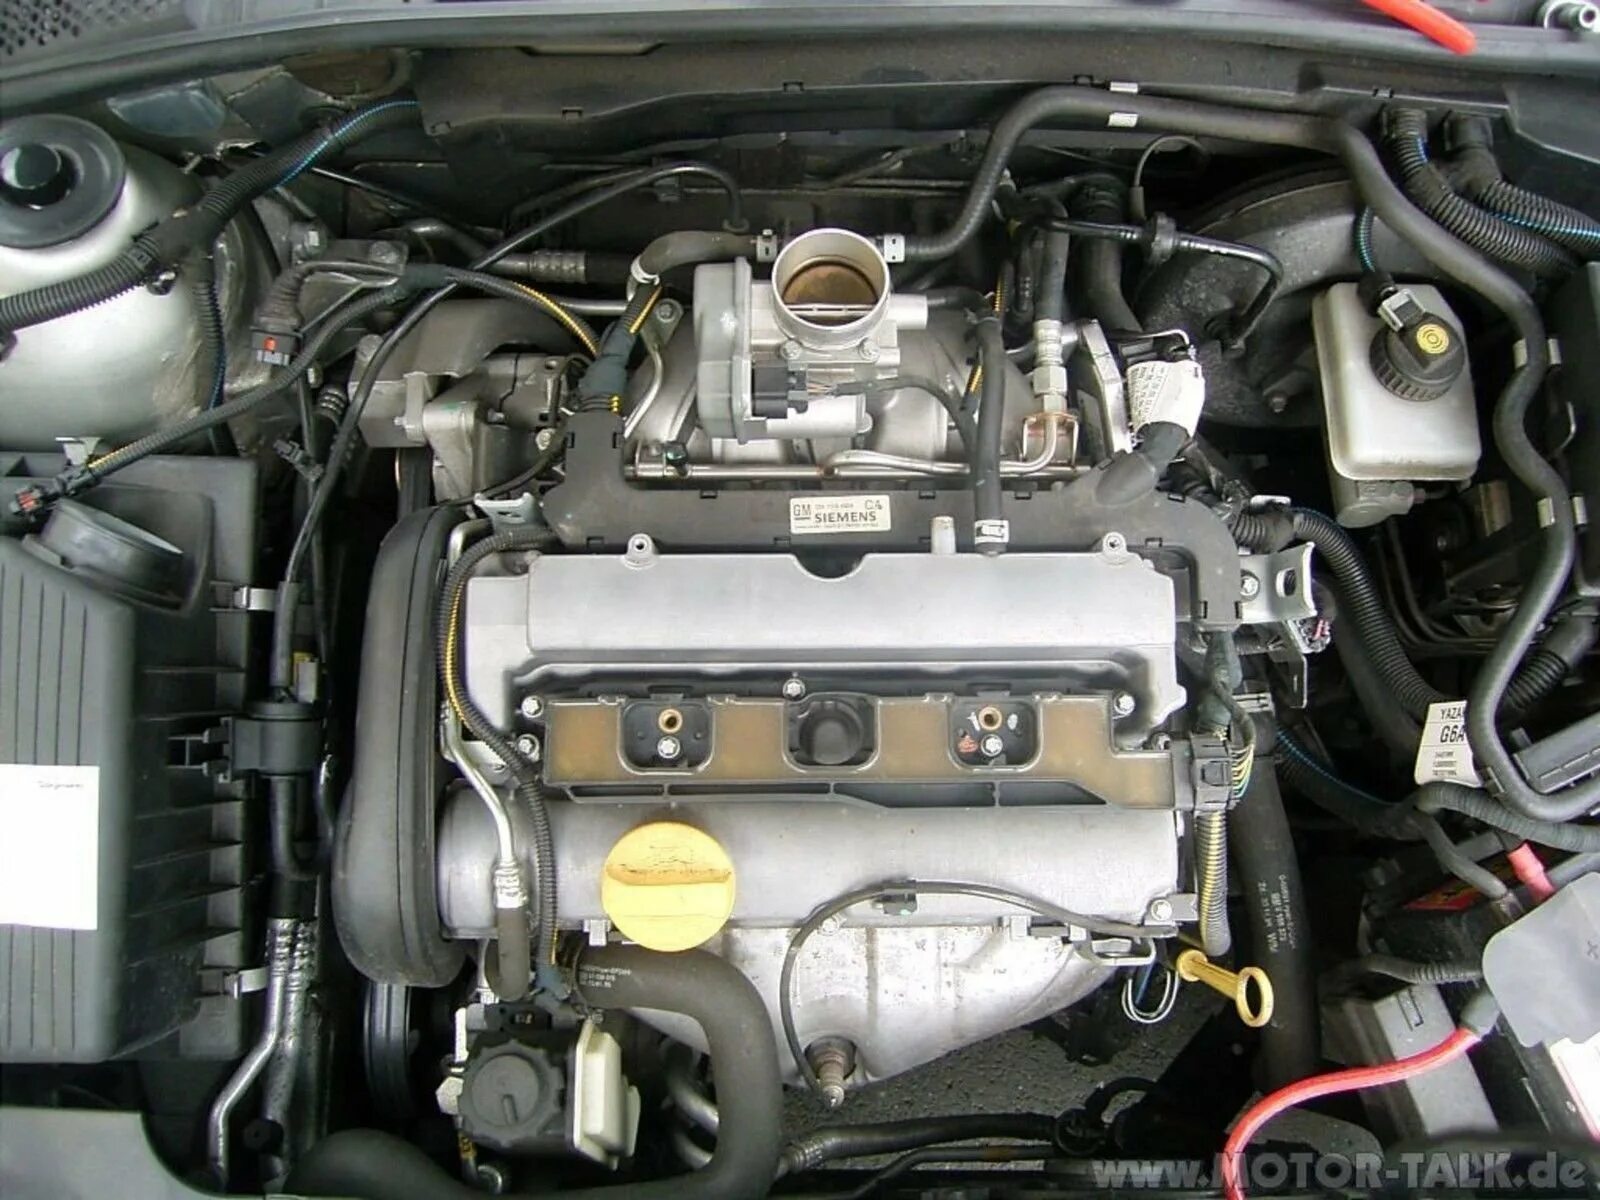 X18xe1 вектра б. Опель Вектра 1 8 16v. Opel Astra g z18xe. Opel Vectra b 1.8 мотор. Двигатель Опель Зафира а 1.8 z18xe.